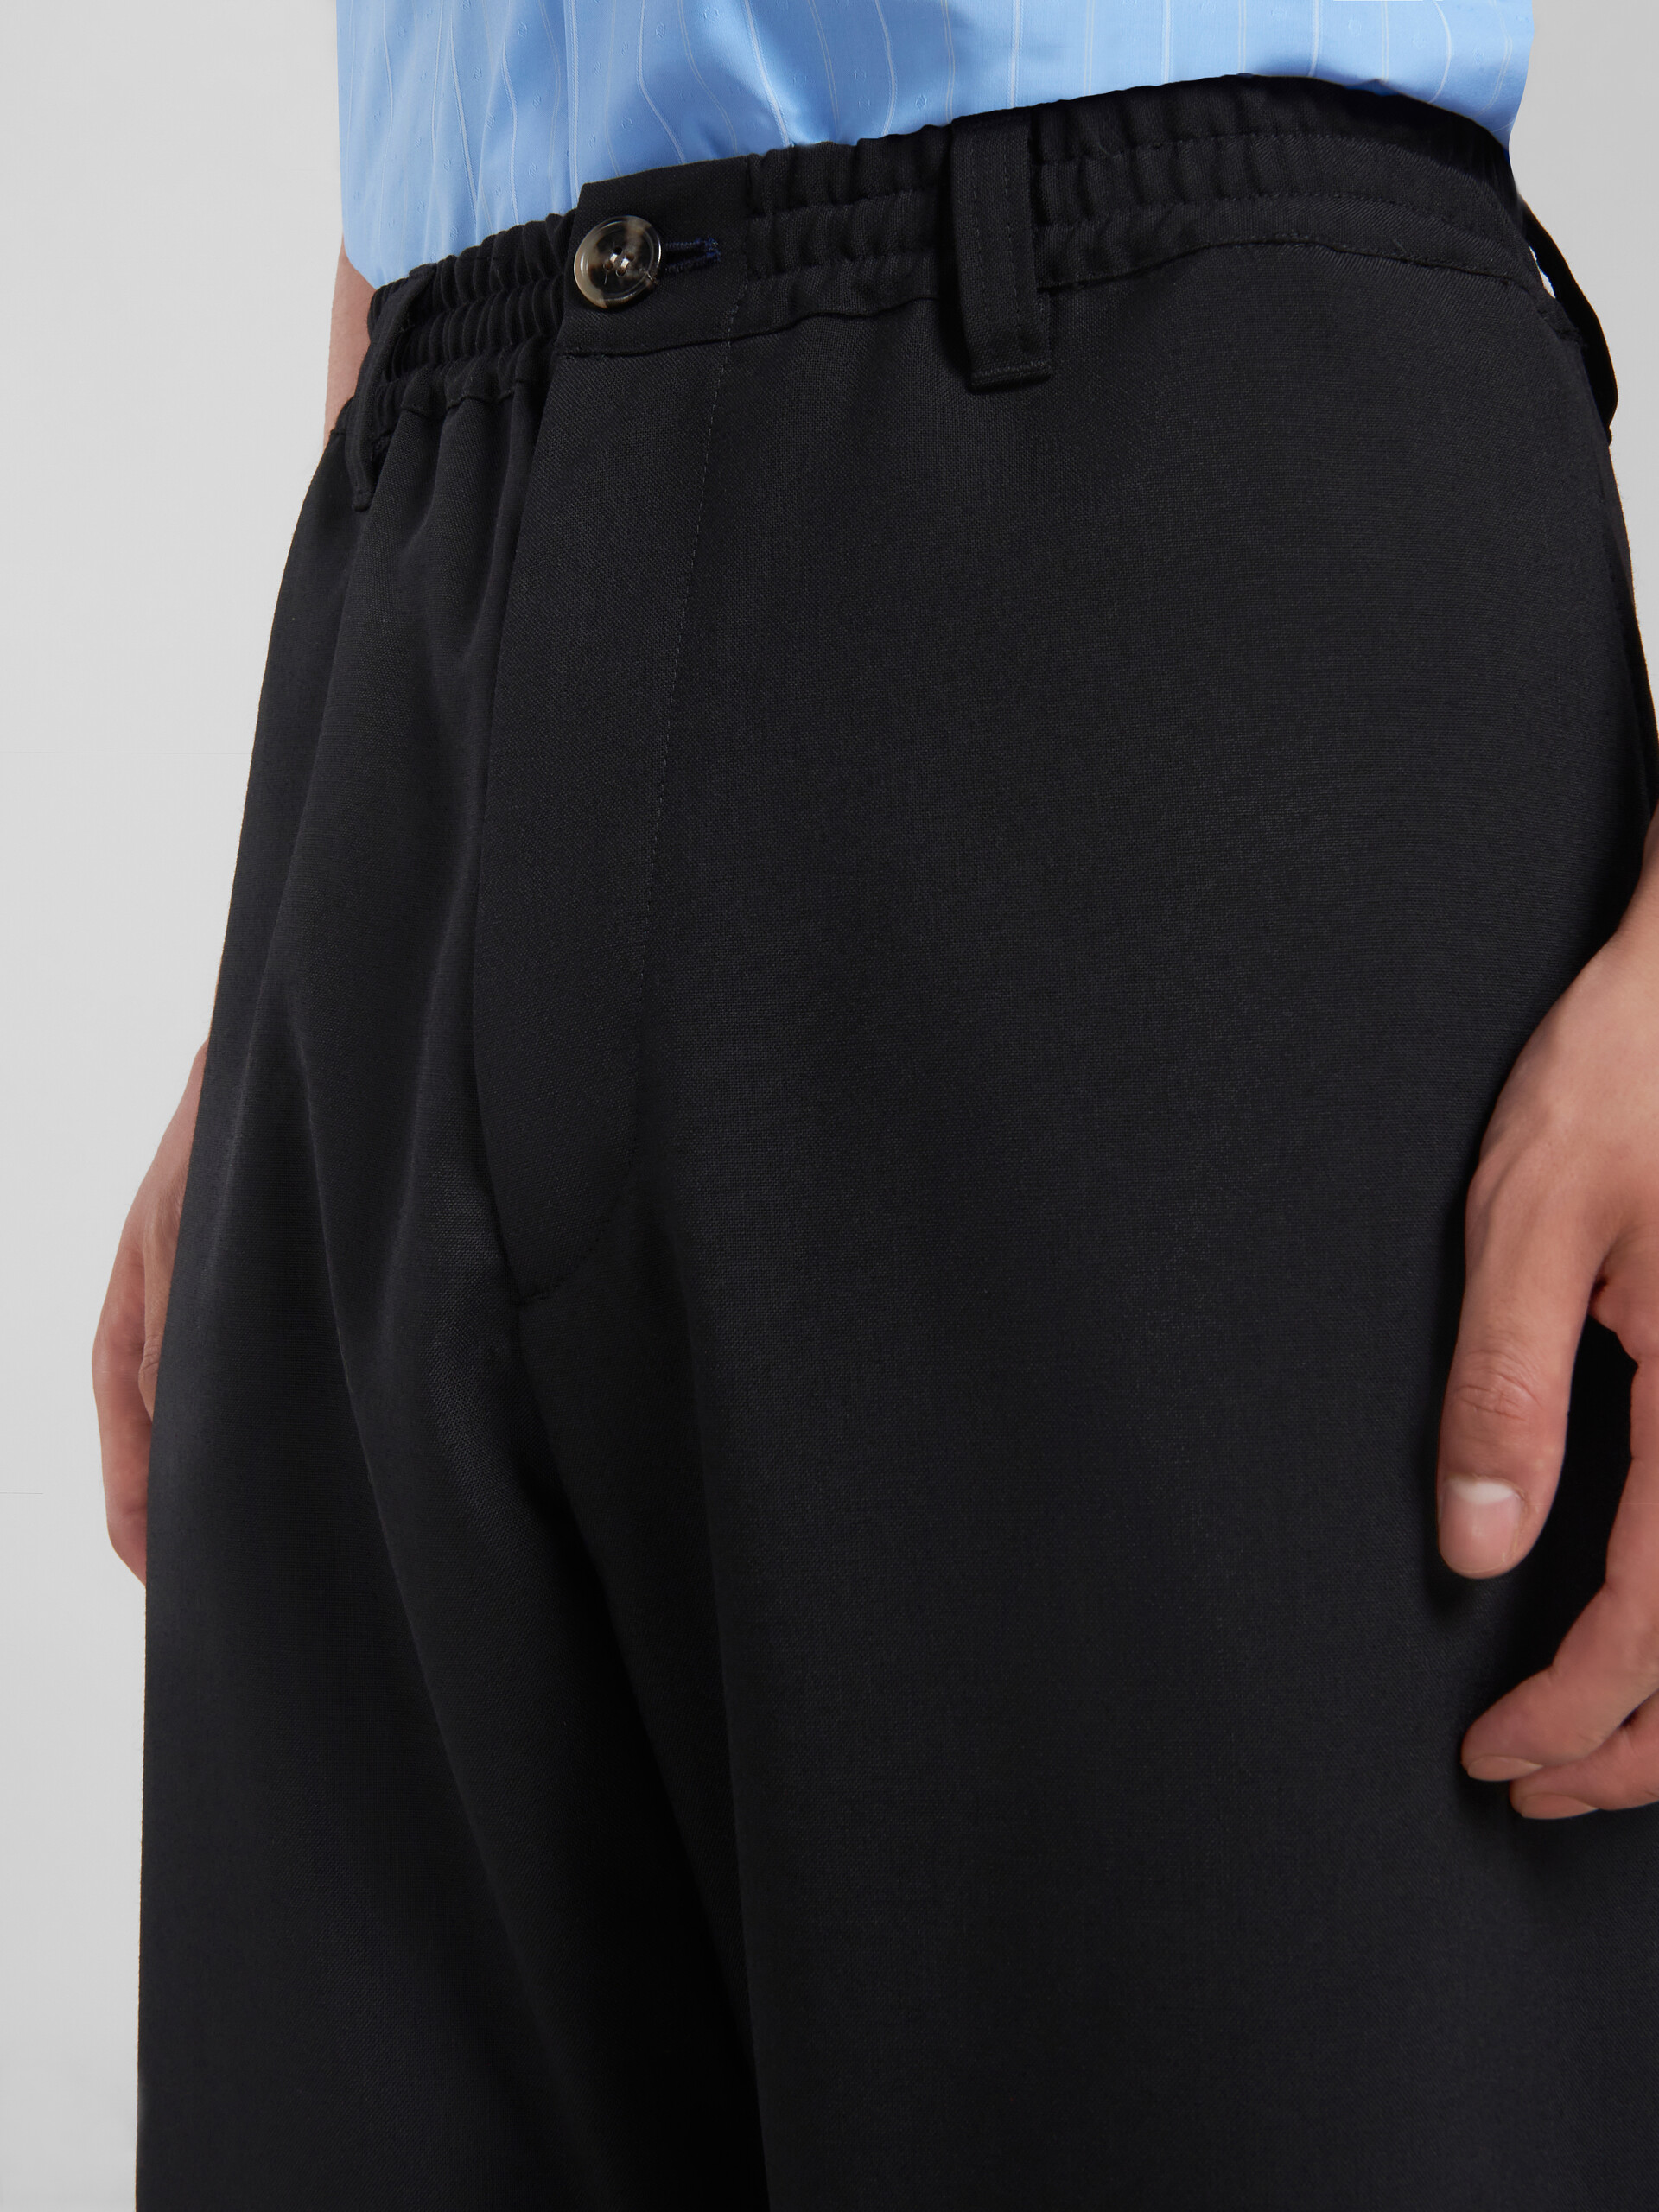 Pantalón negro de lana tropical - Pantalones - Image 4